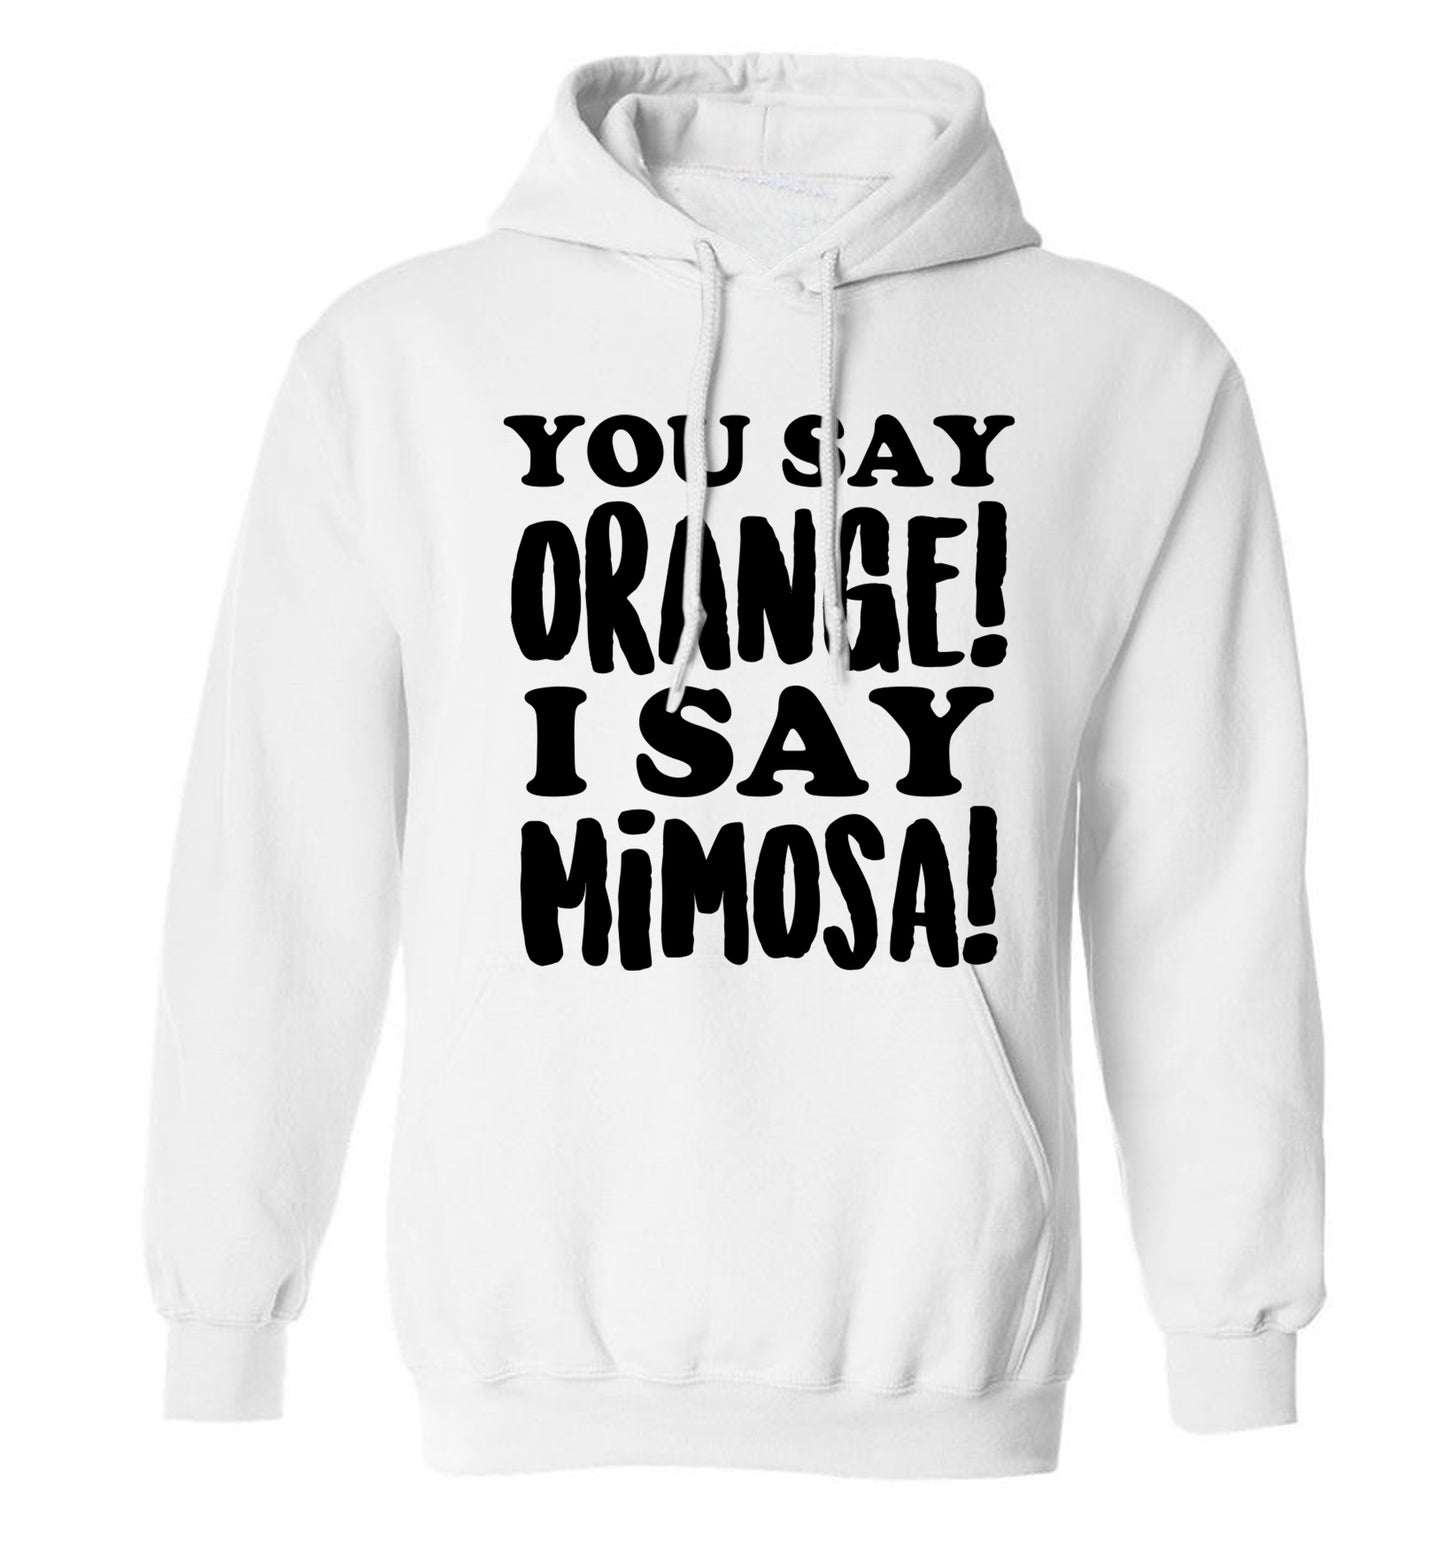 You say orange I say mimosa! adults unisex white hoodie 2XL